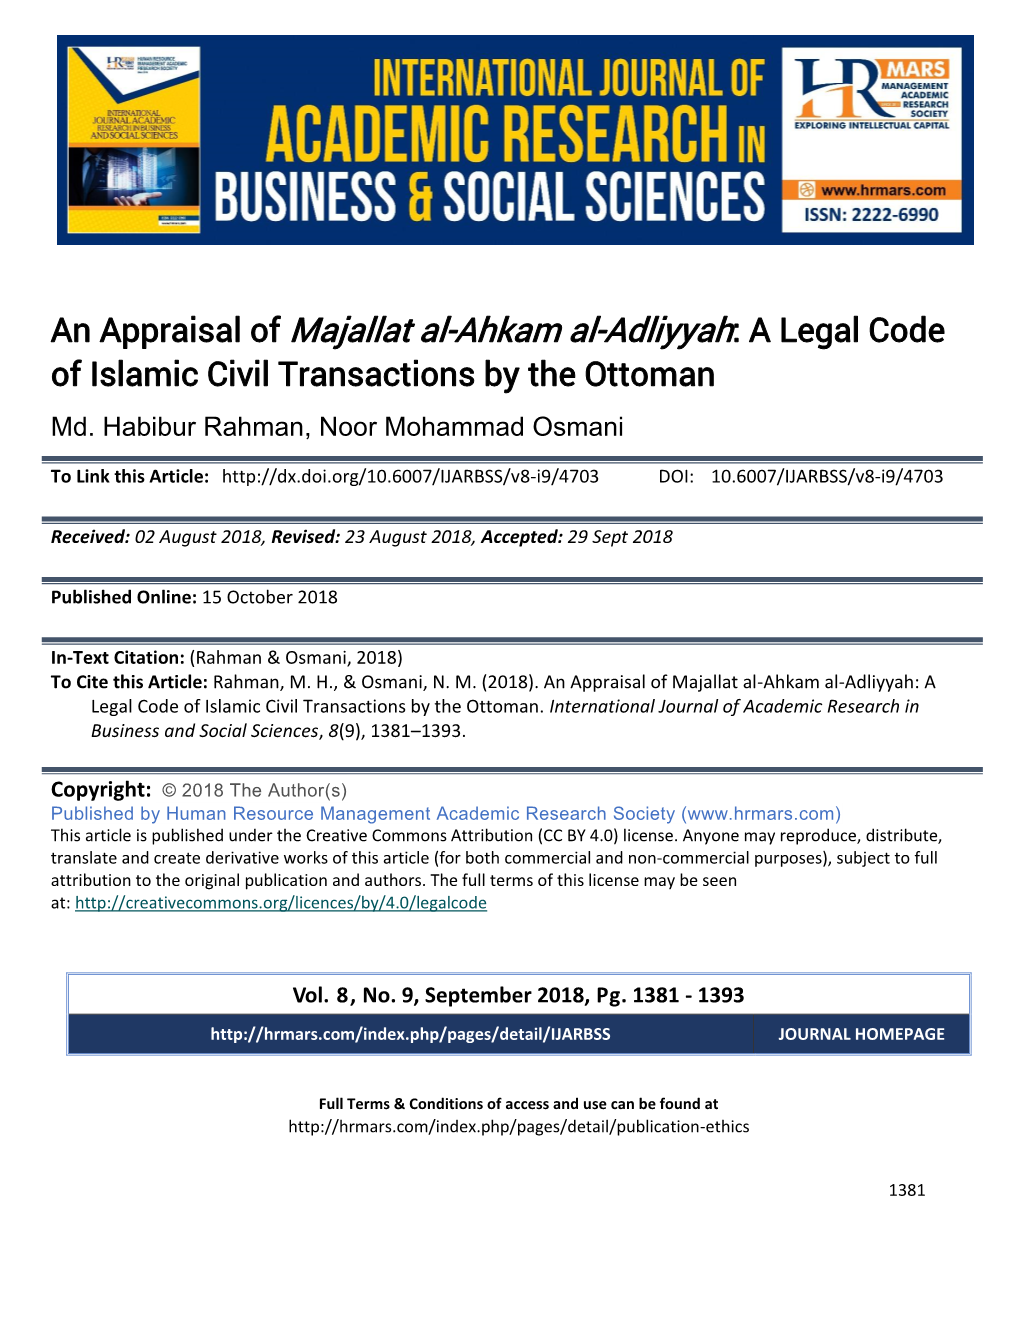 An Appraisal of Majallat Al-Ahkam Al-Adliyyah: a Legal Code of Islamic Civil Transactions by the Ottoman